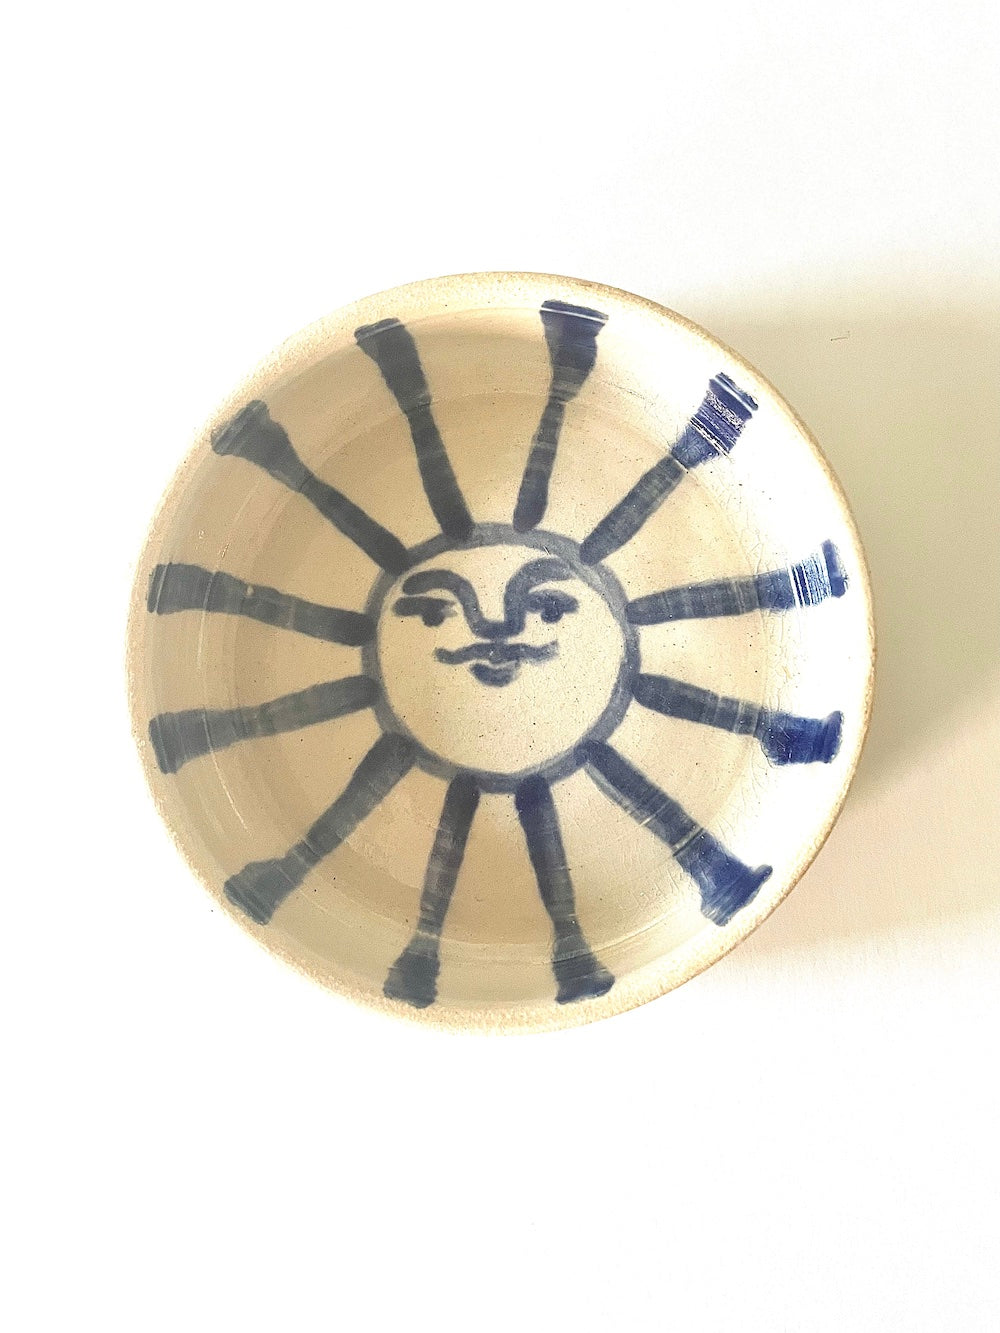 Blue Sun Catch-All - Hey Moon Ceramics